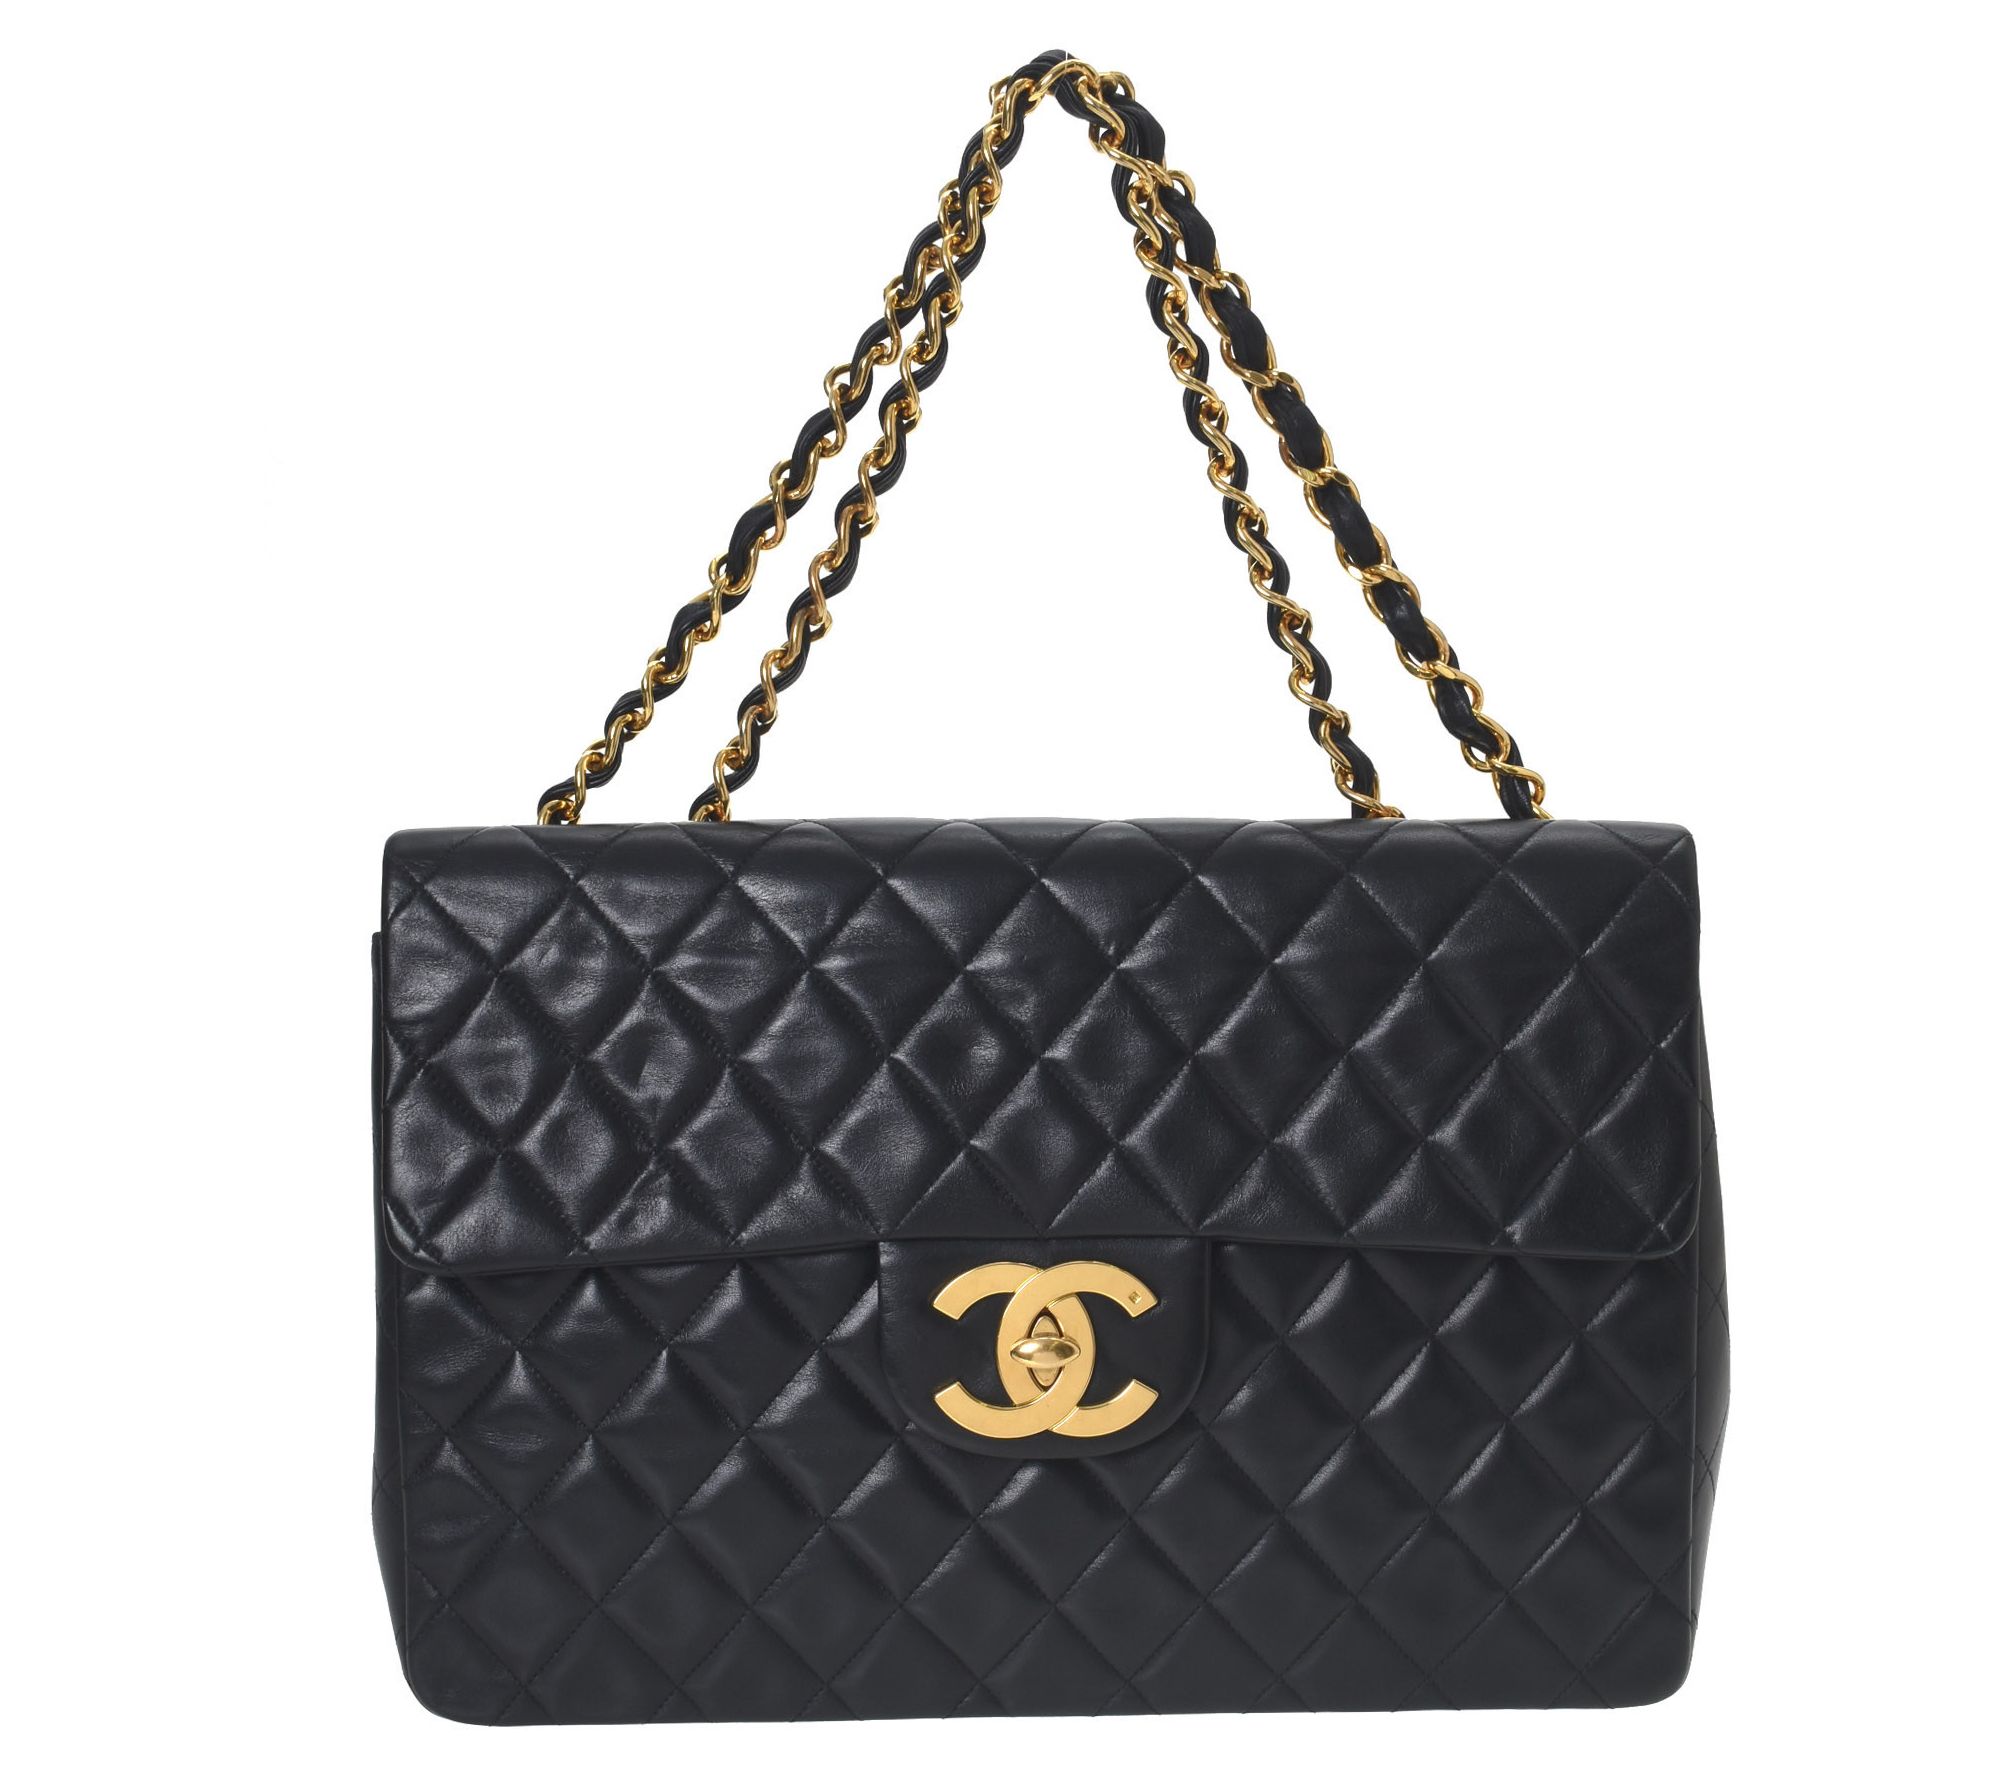 Chanel Jumbo XL Bag Review, Lollipuff